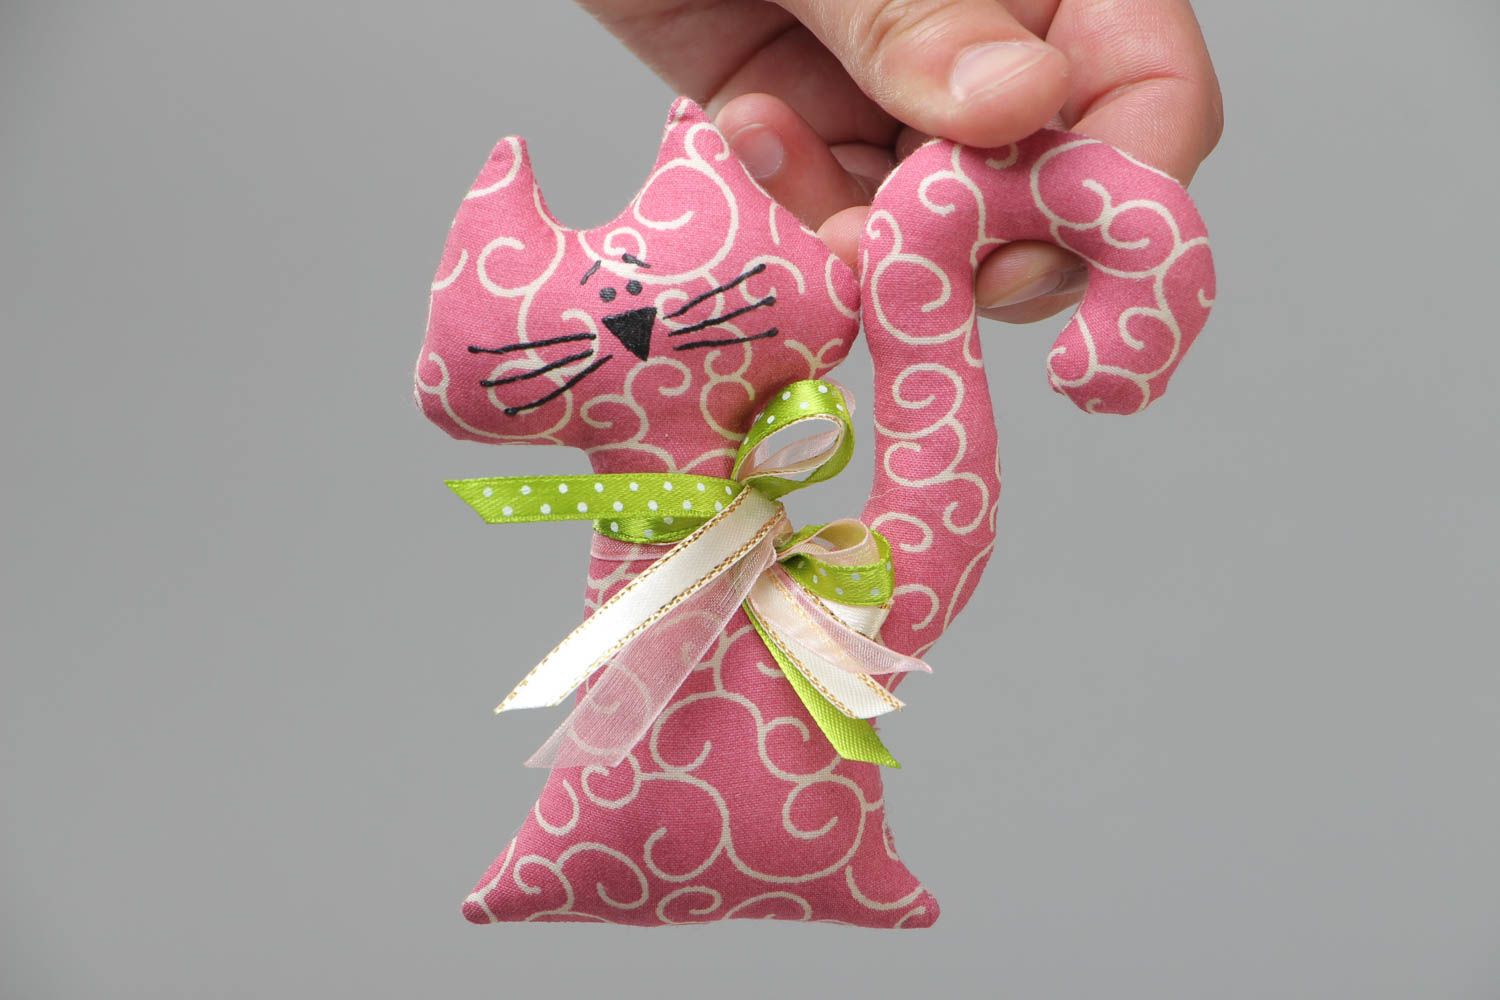 Magnet frigo fait main design original en tissu en forme de beau chat rose photo 5